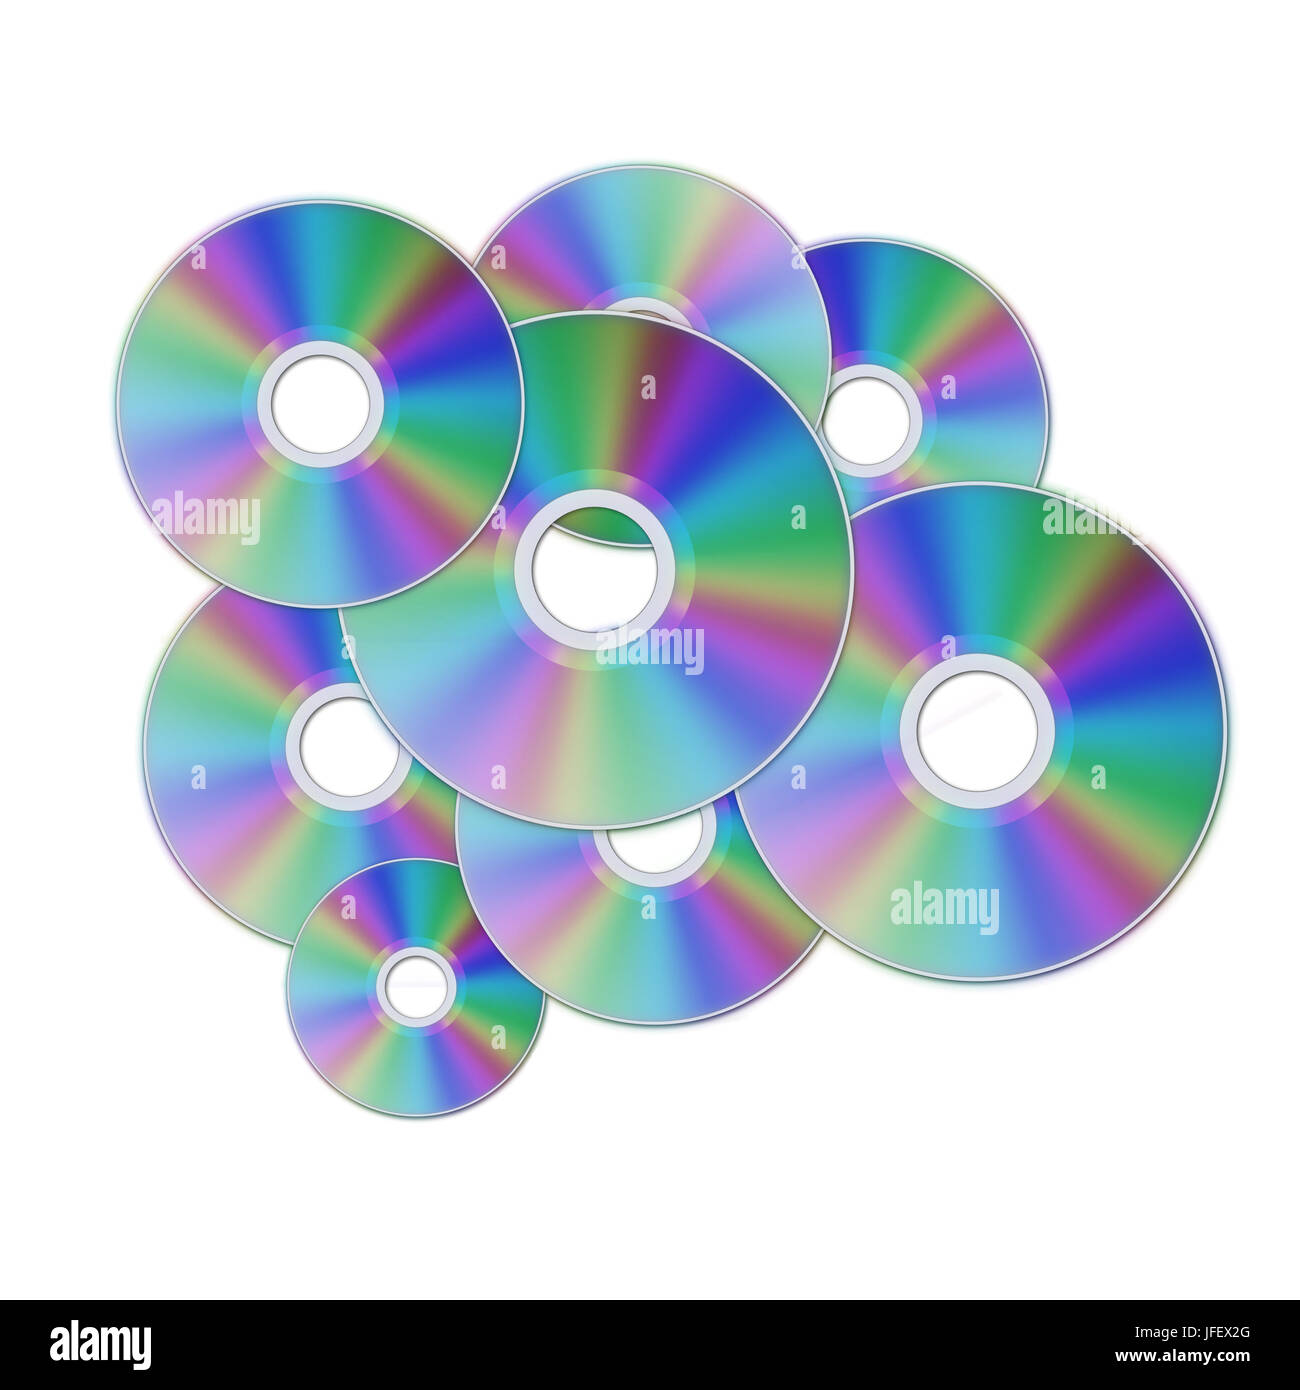 cd discs over white background Stock Photo